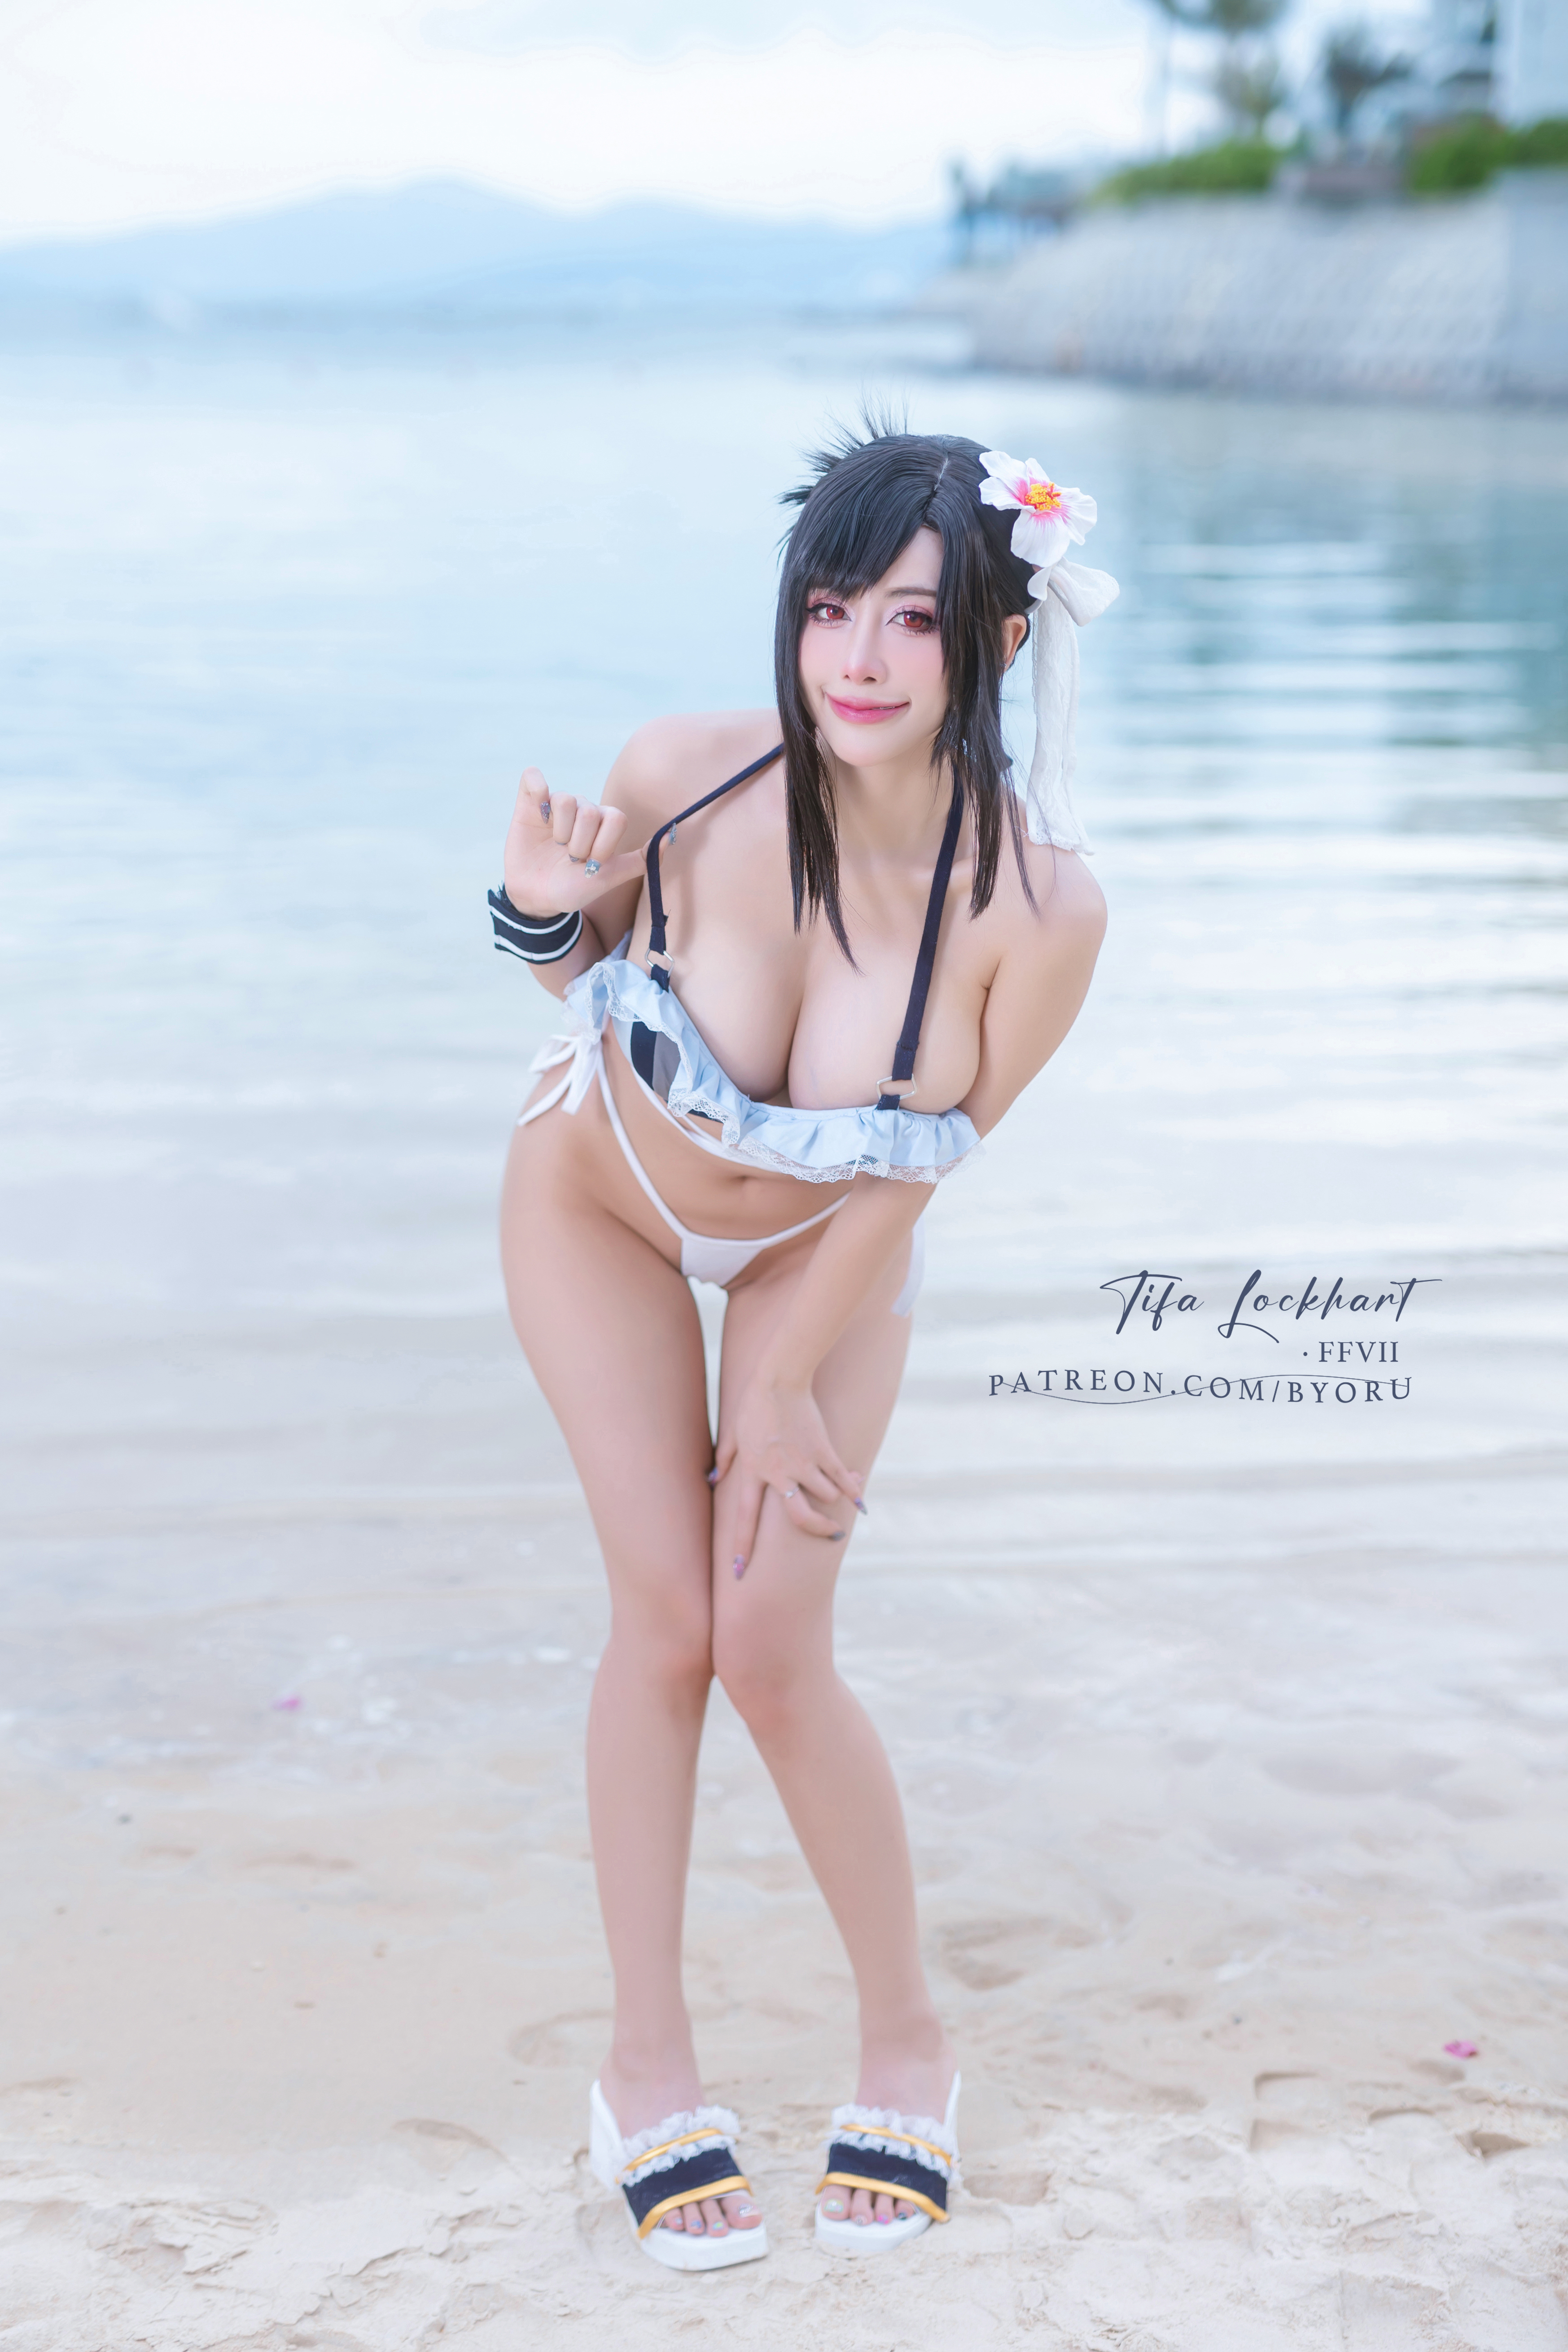 People 3494x5241 Byoru women model Asian cosplay Tifa Lockhart Final Fantasy video game girls swimwear